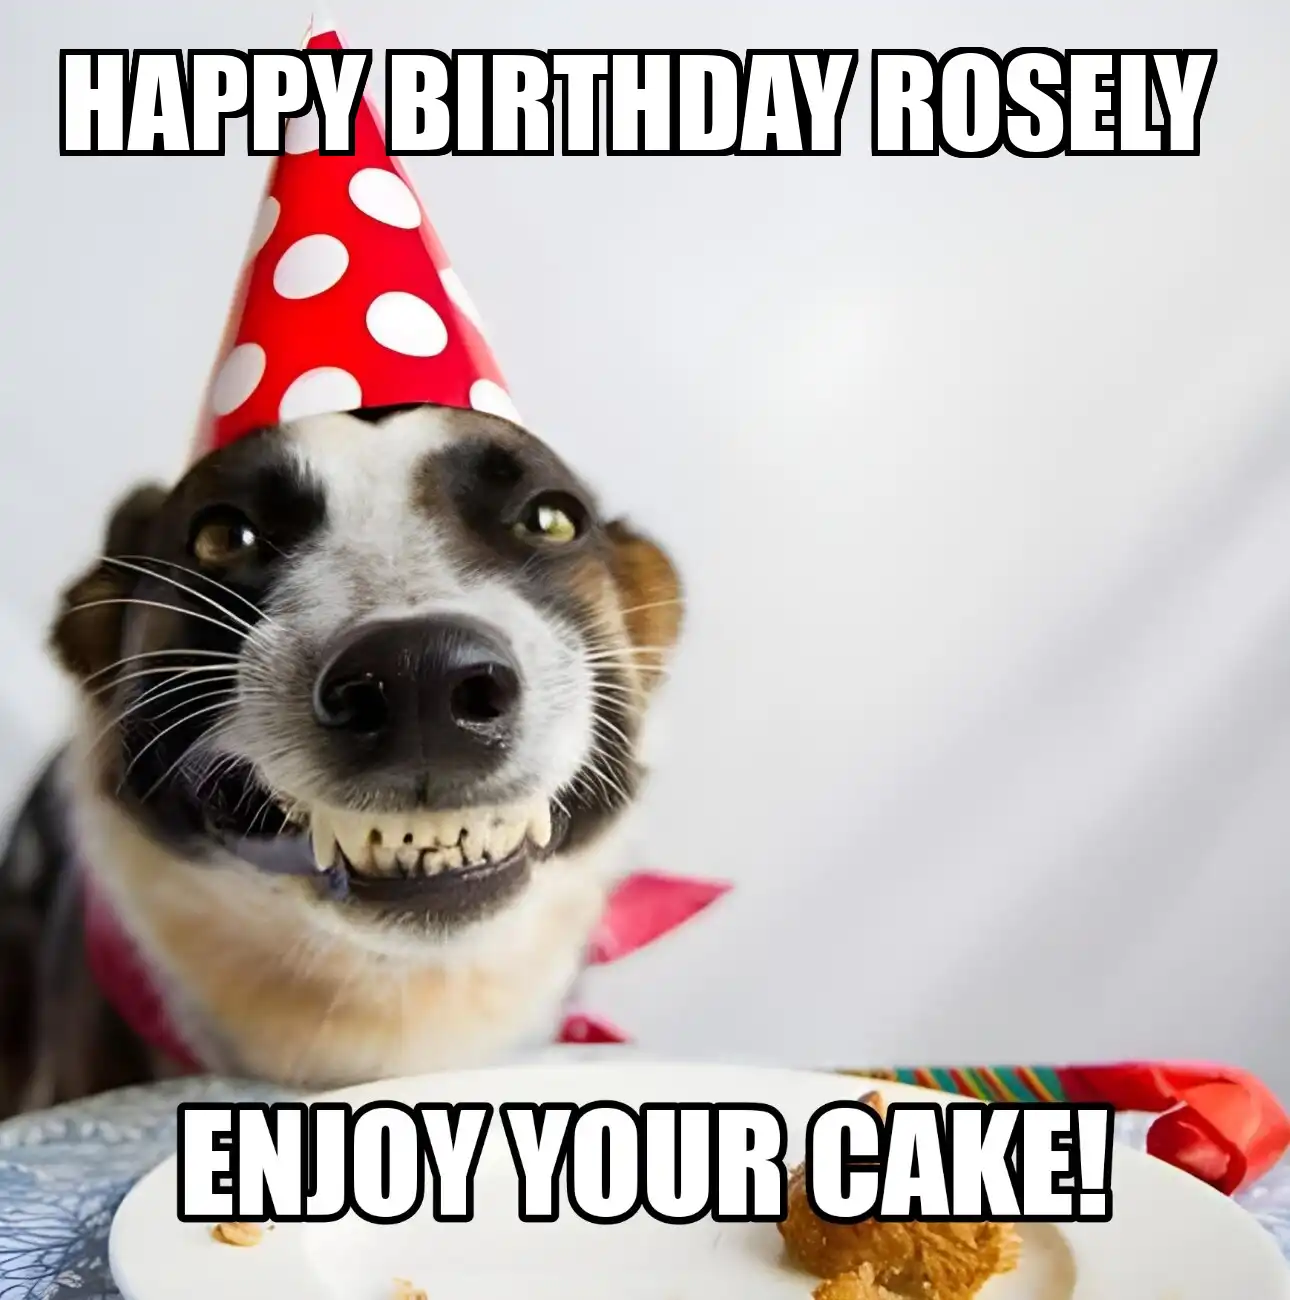 Happy Birthday Rosely Enjoy Your Cake Dog Meme